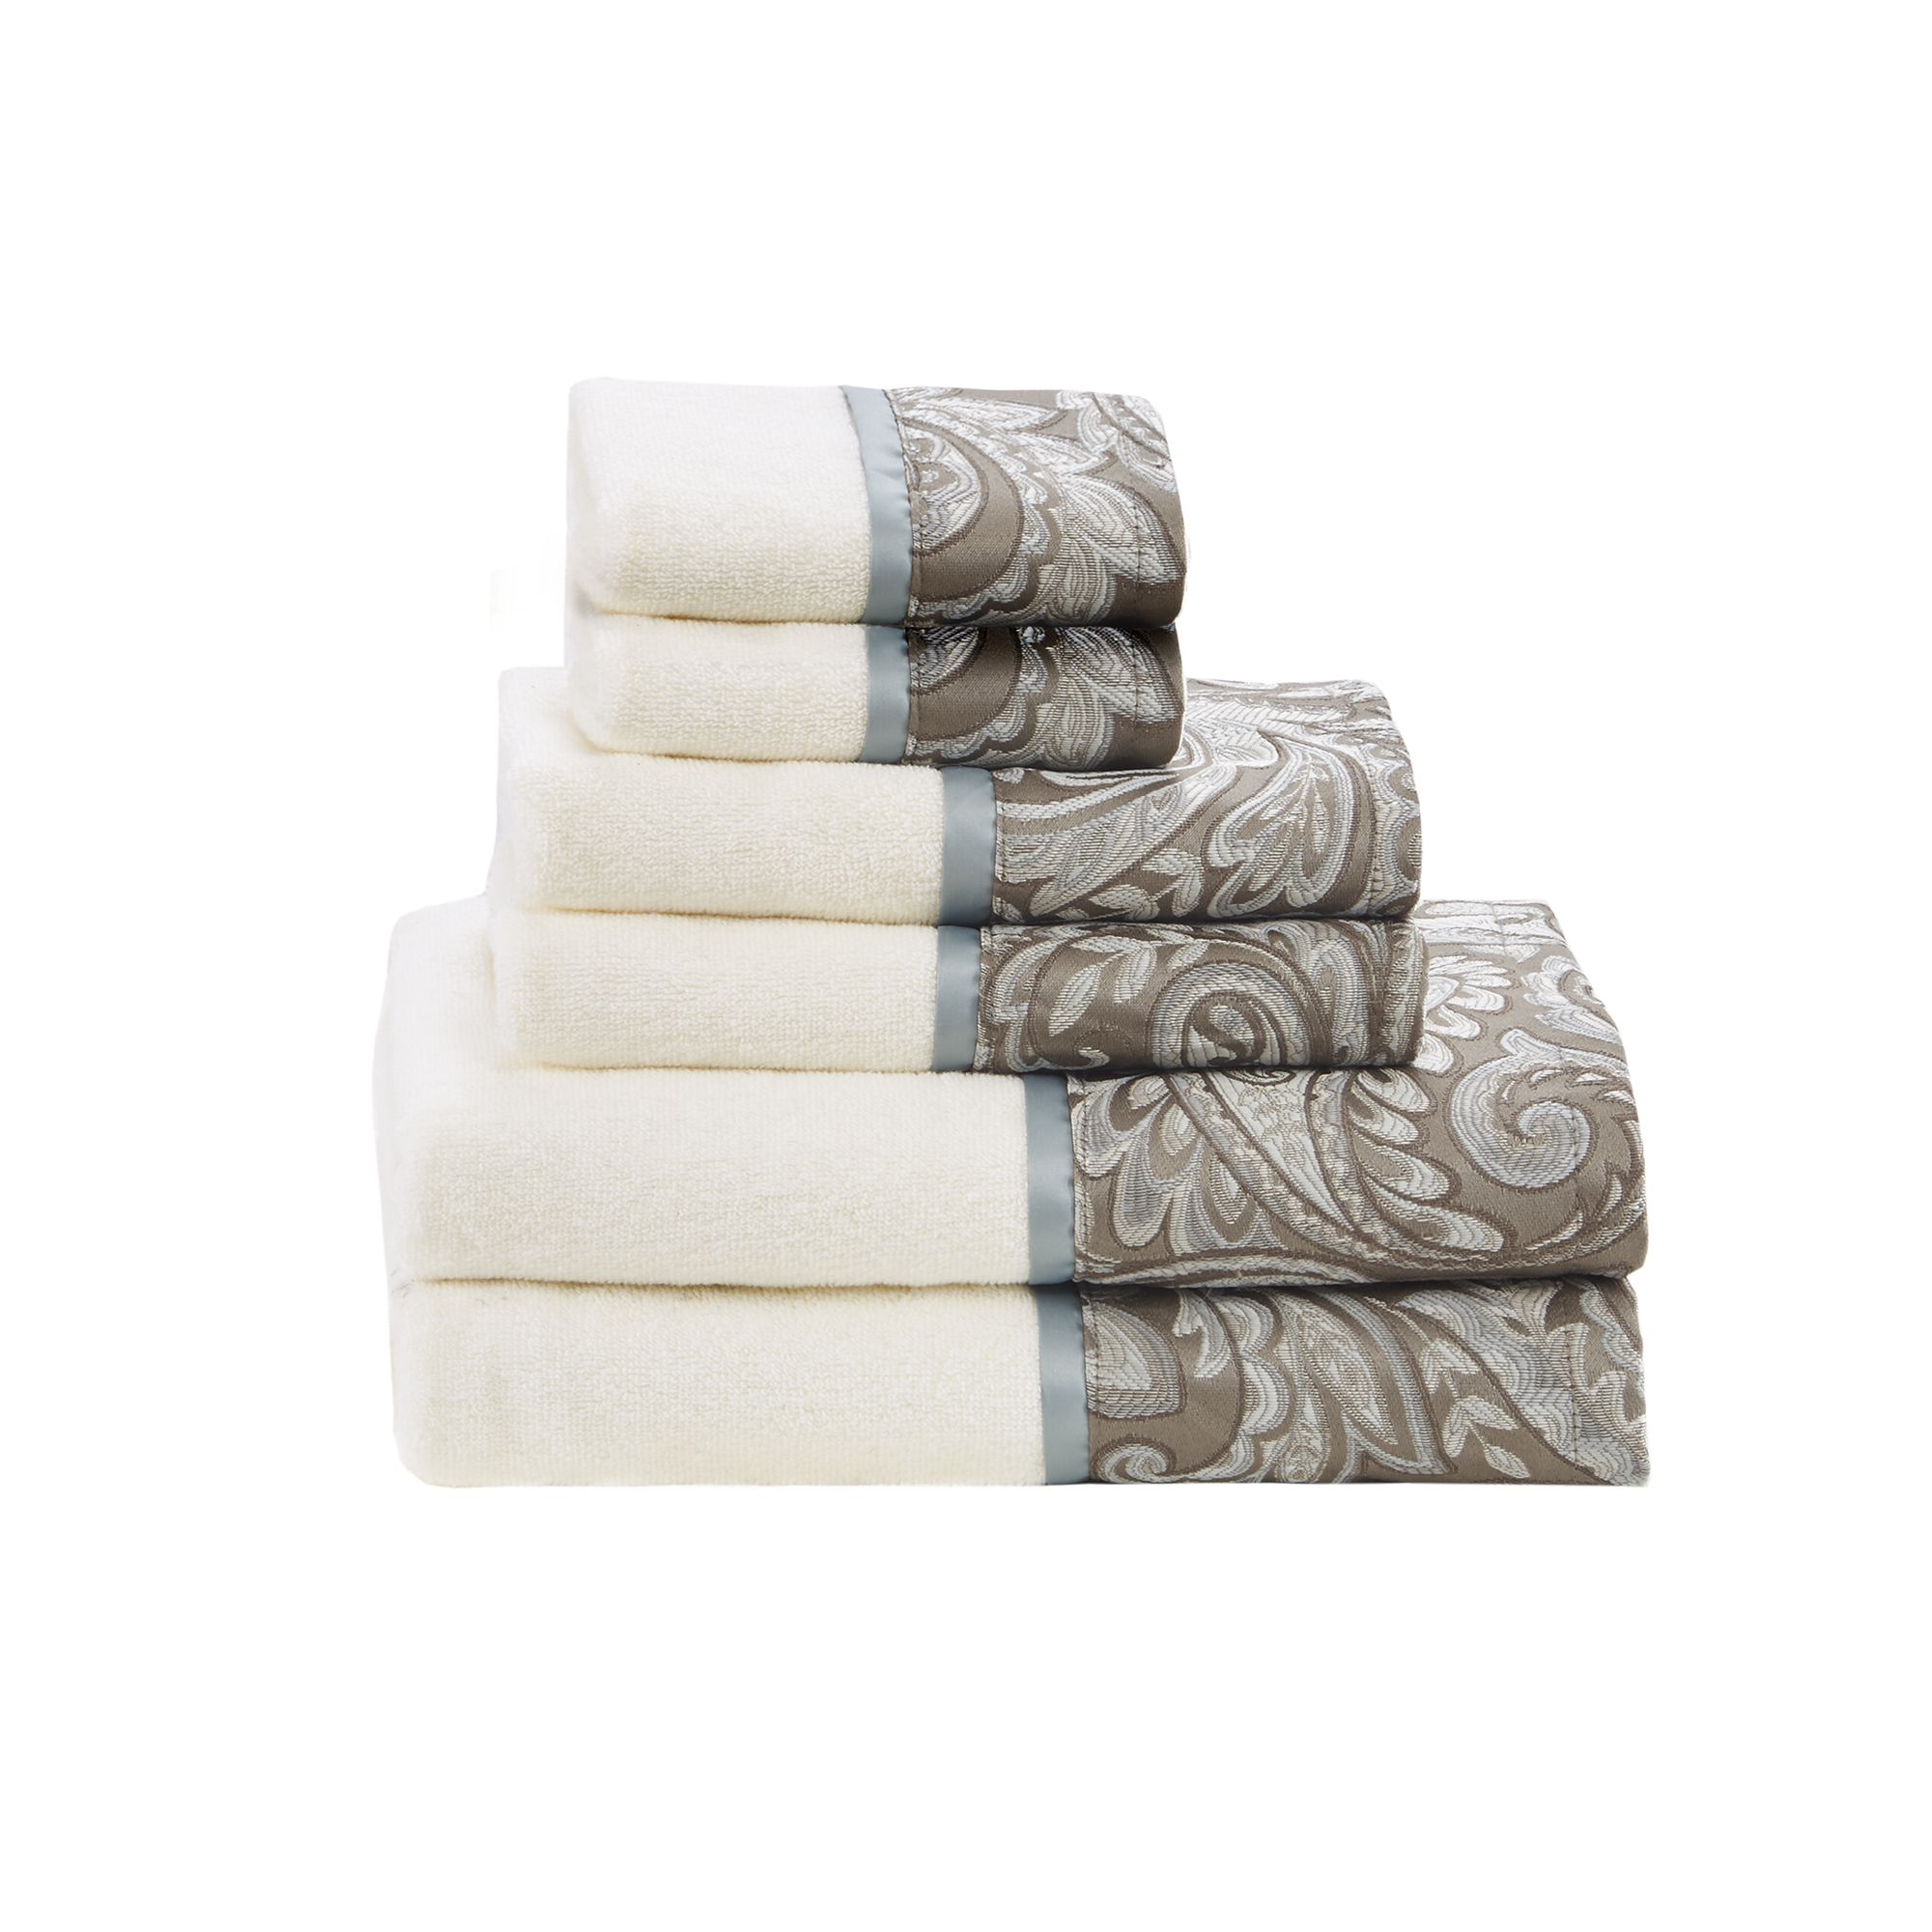 washcloth folding craft santa  Washcloth crafts, Towel crafts, Towel  animals